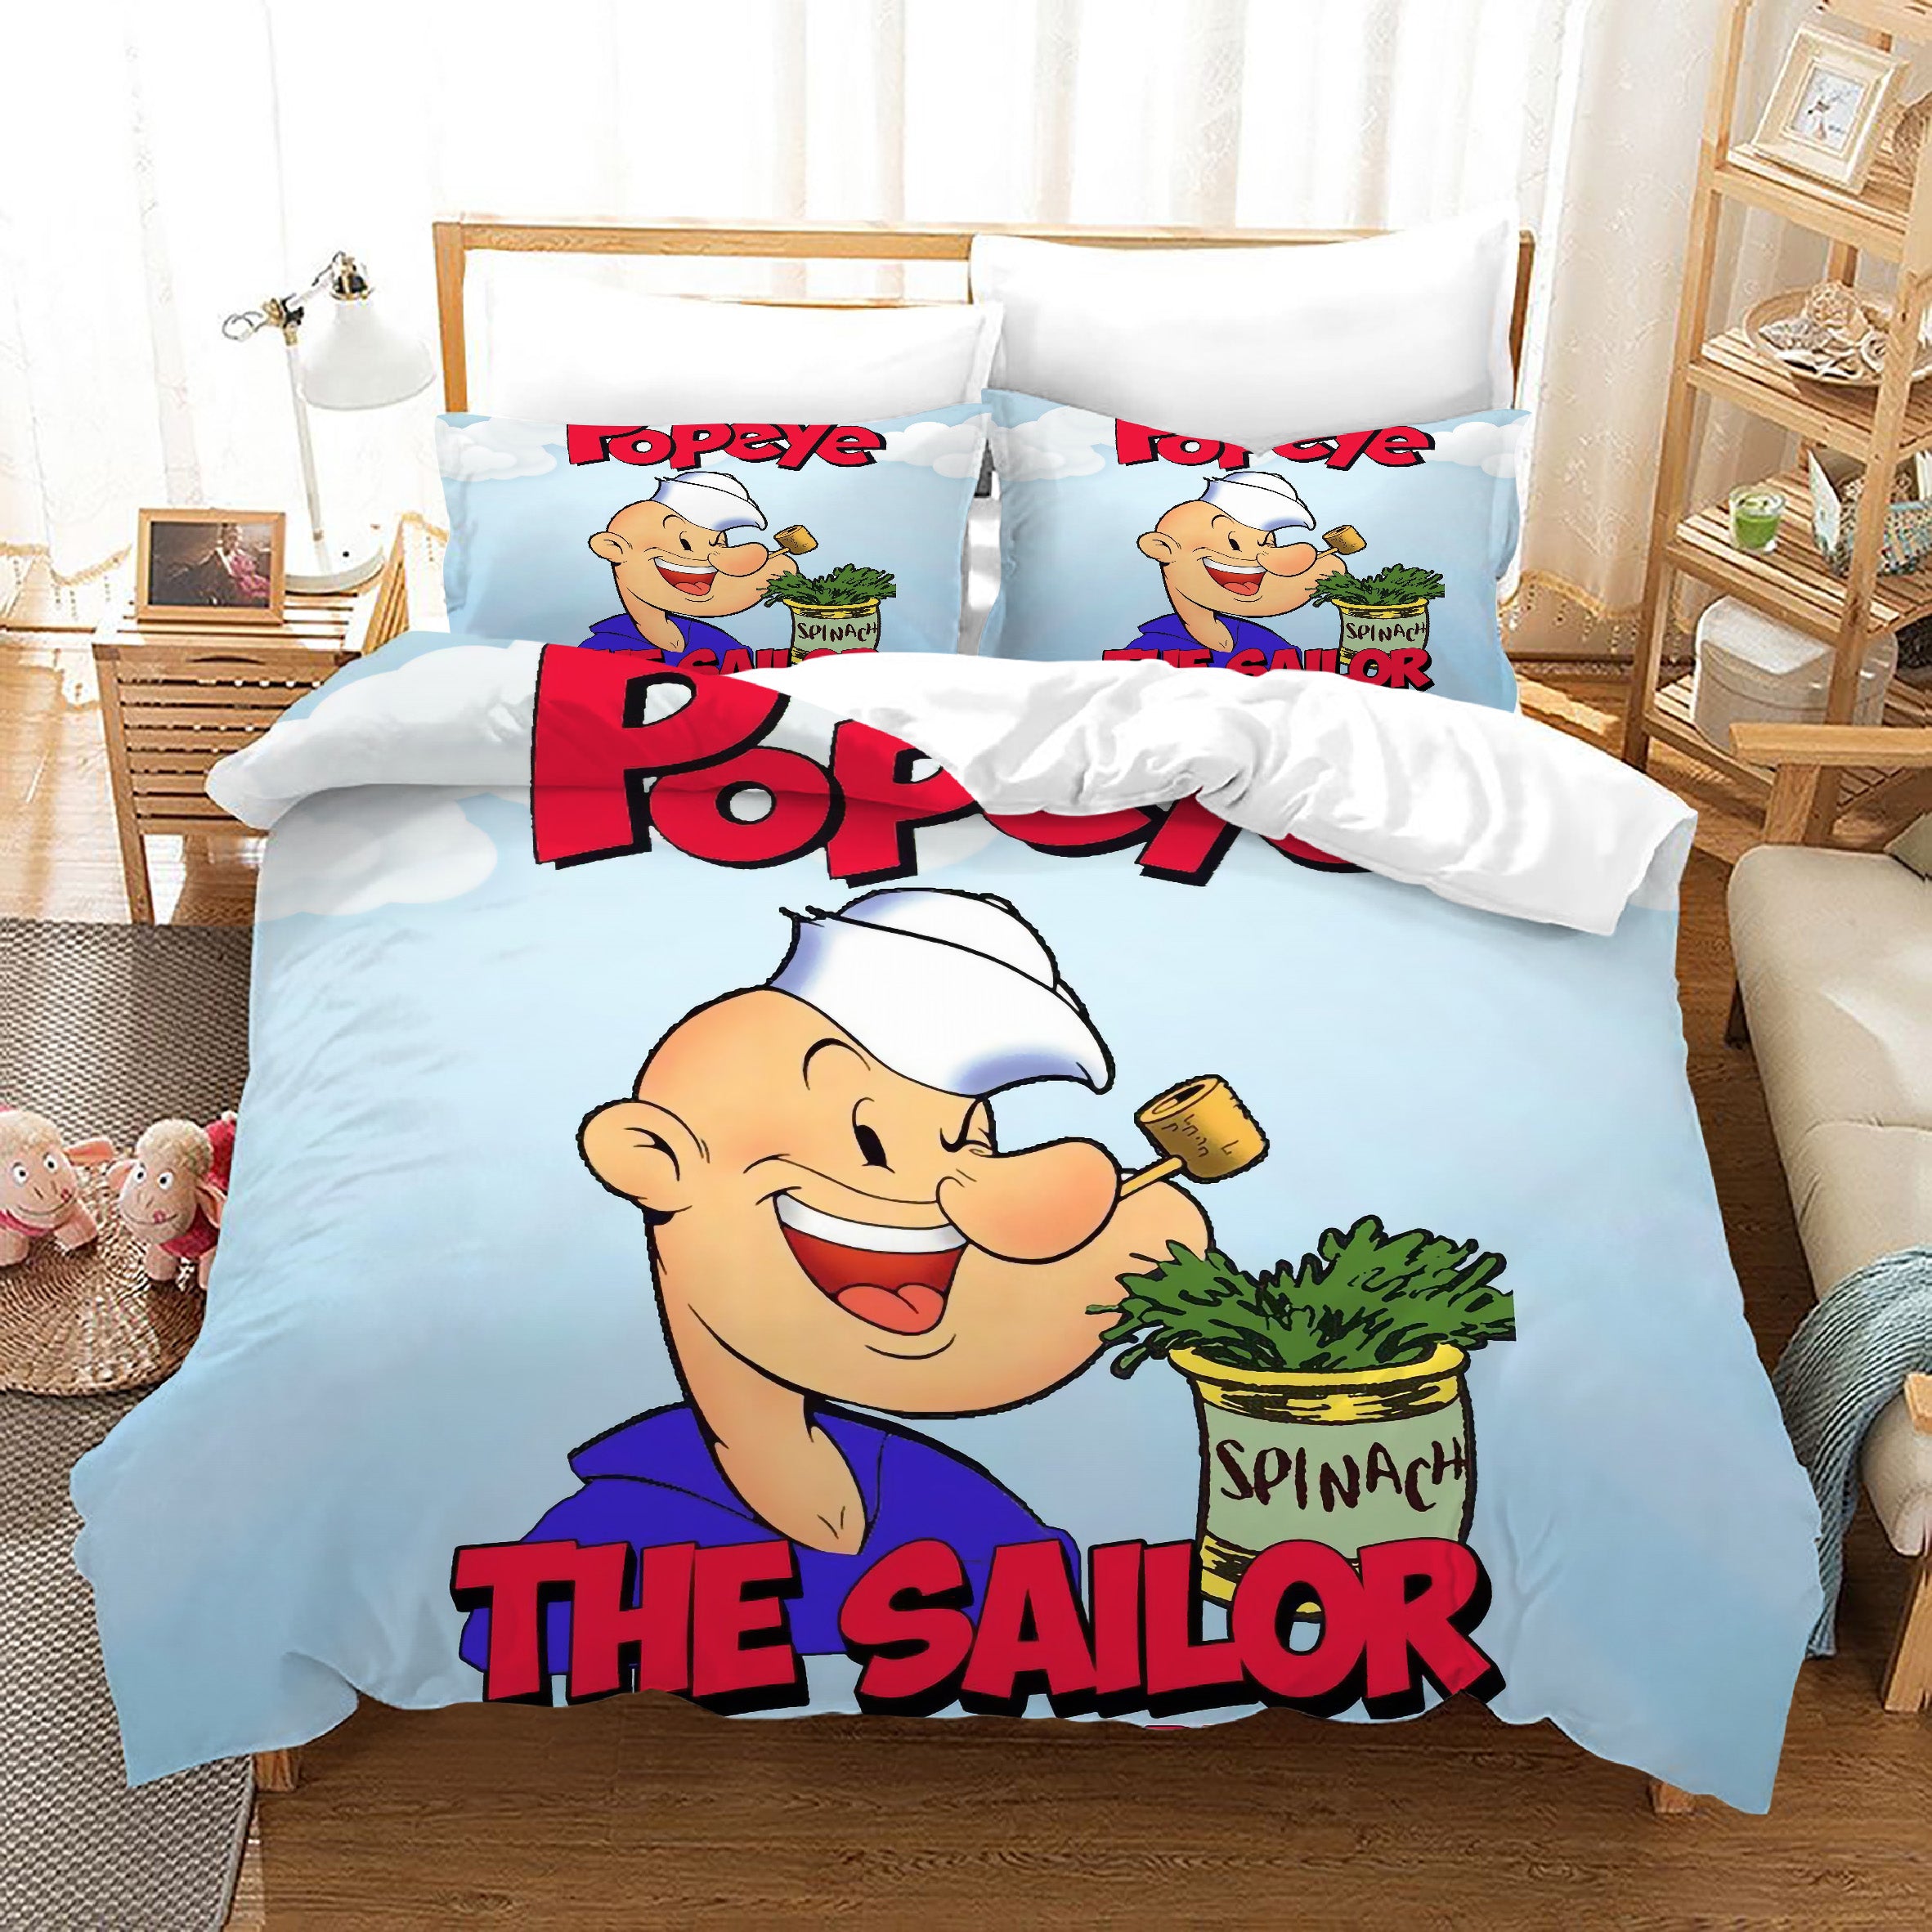 Popeye the Sailor  Duvet Cover Quilt Cover Pillowcase Bedding Set Bed Linen